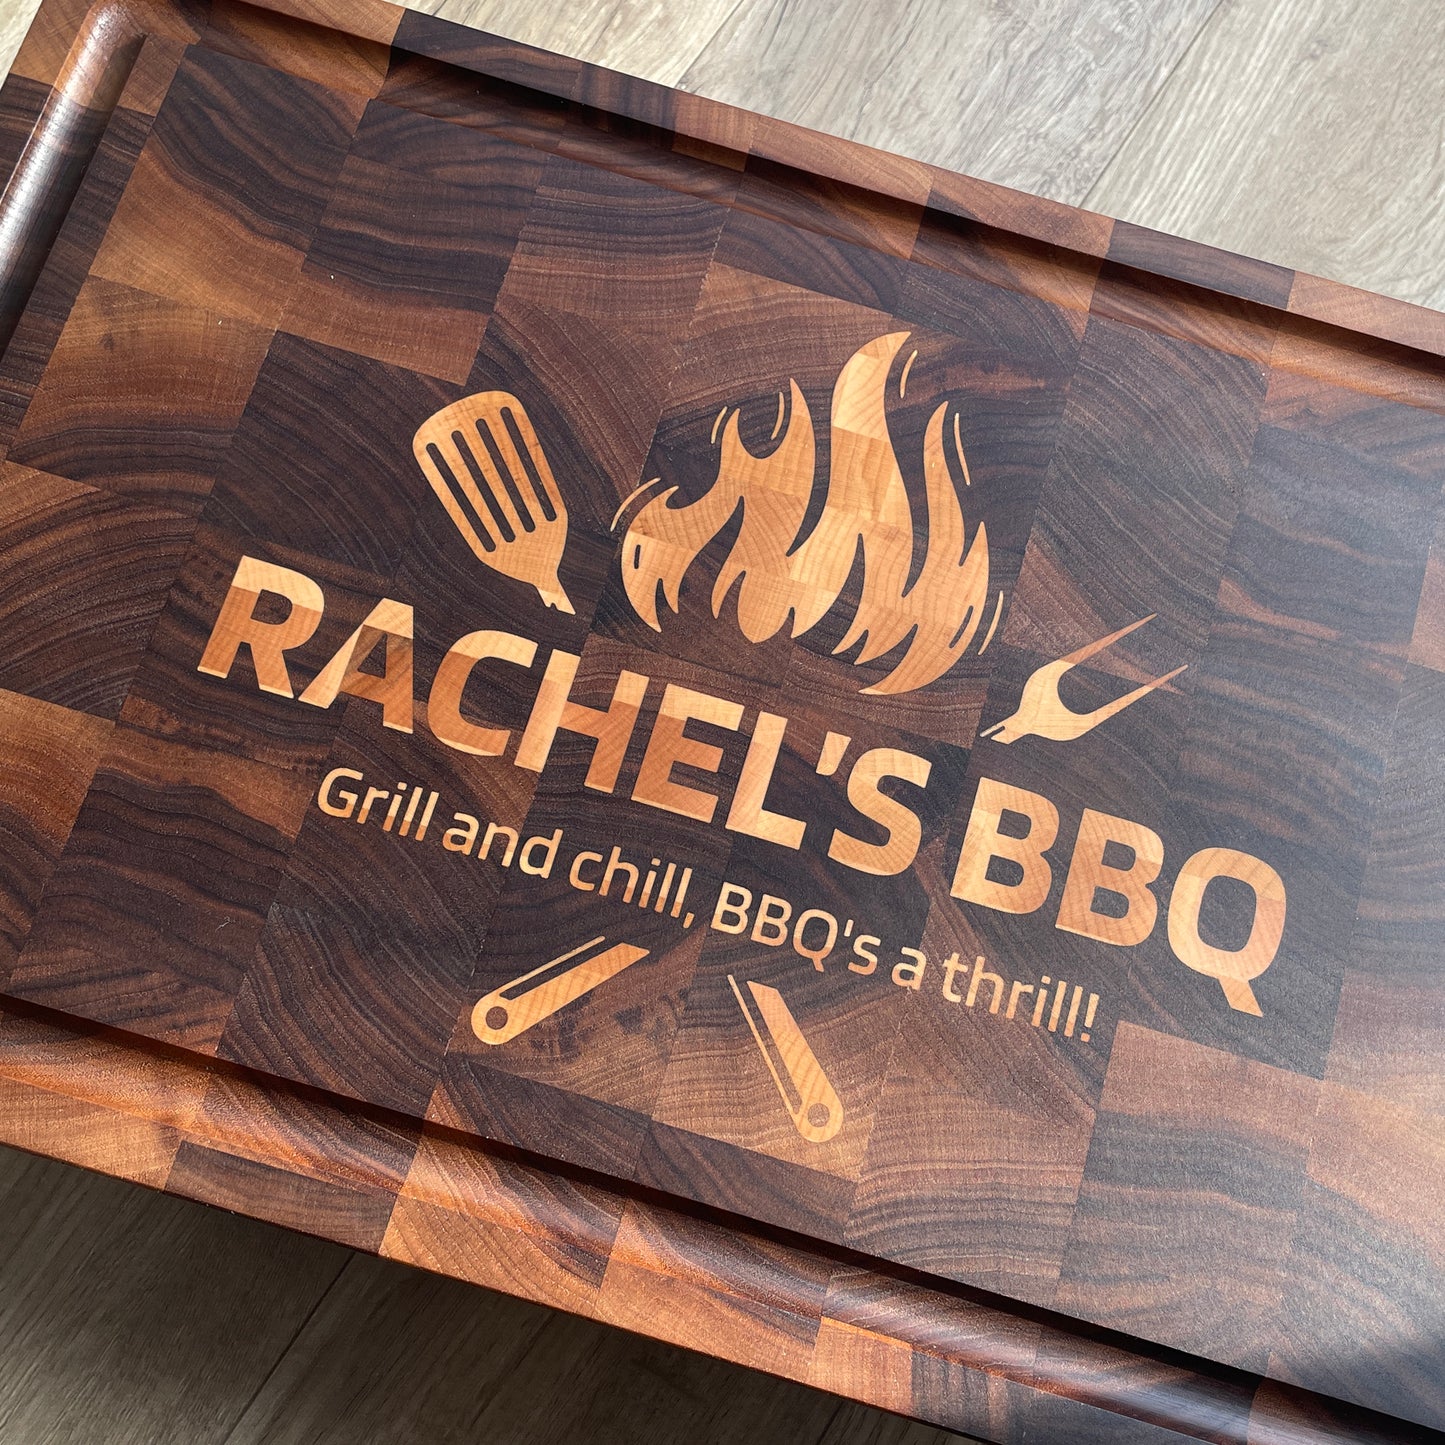 Personalized Wood inlay cutting board - BBQ design